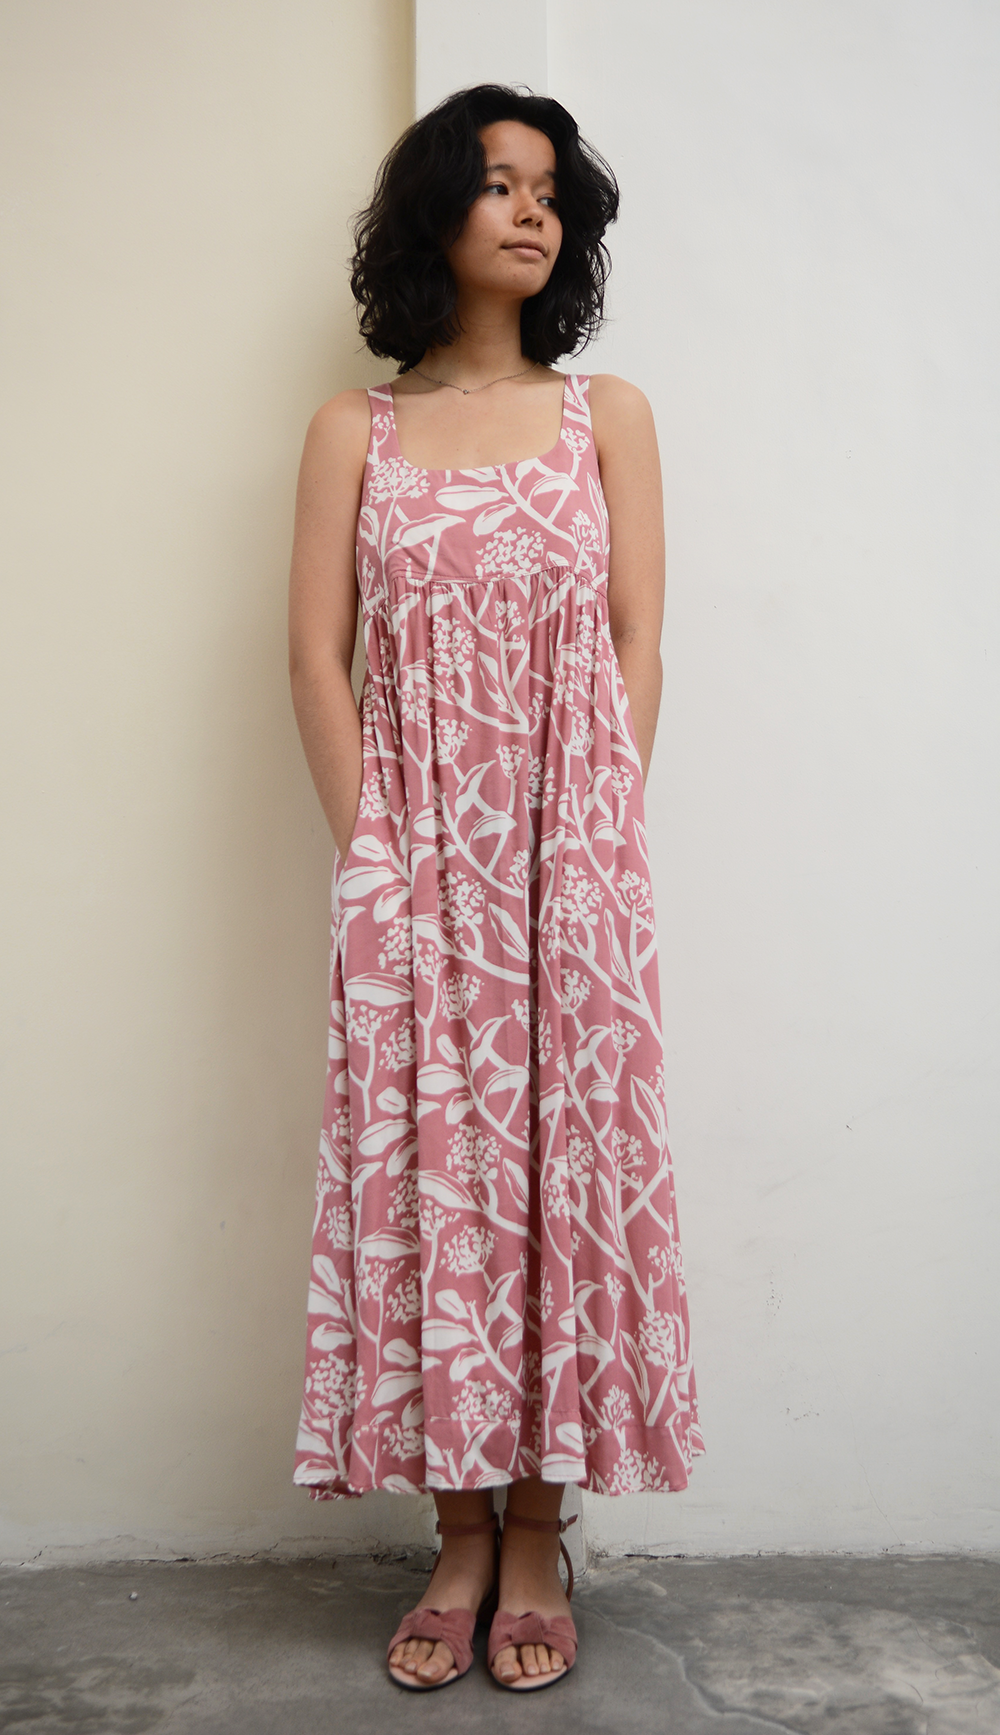 Frangipani Blush Romantic Rayon Dress, 3 sizes